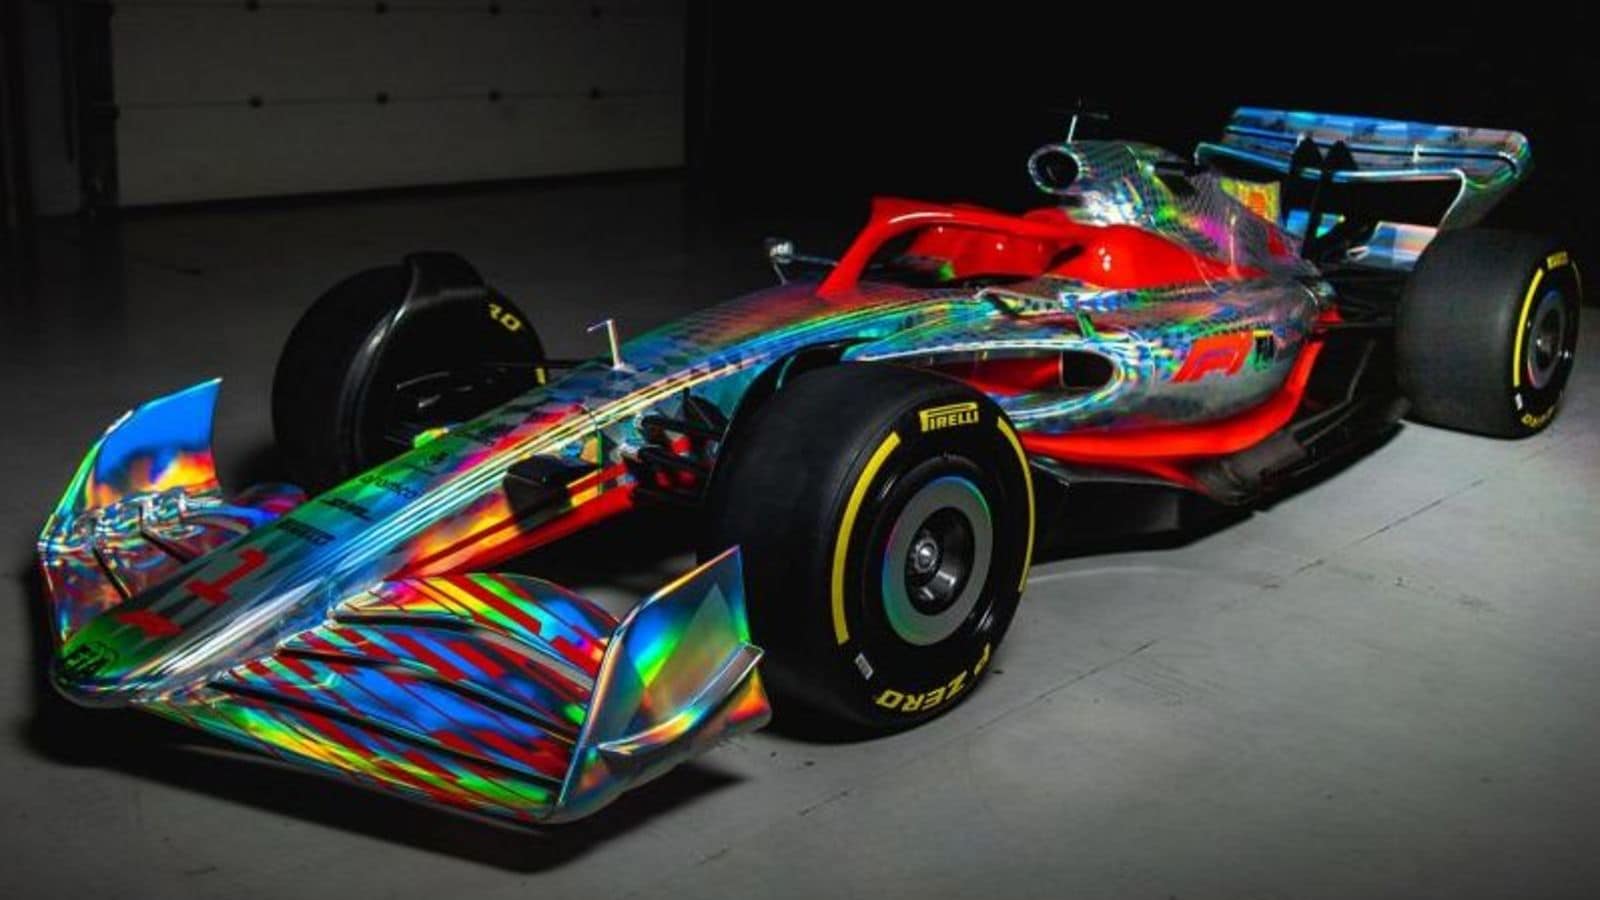 aansluiten Rauw Stap 2022 Formula One race car: Key facts to know | HT Auto